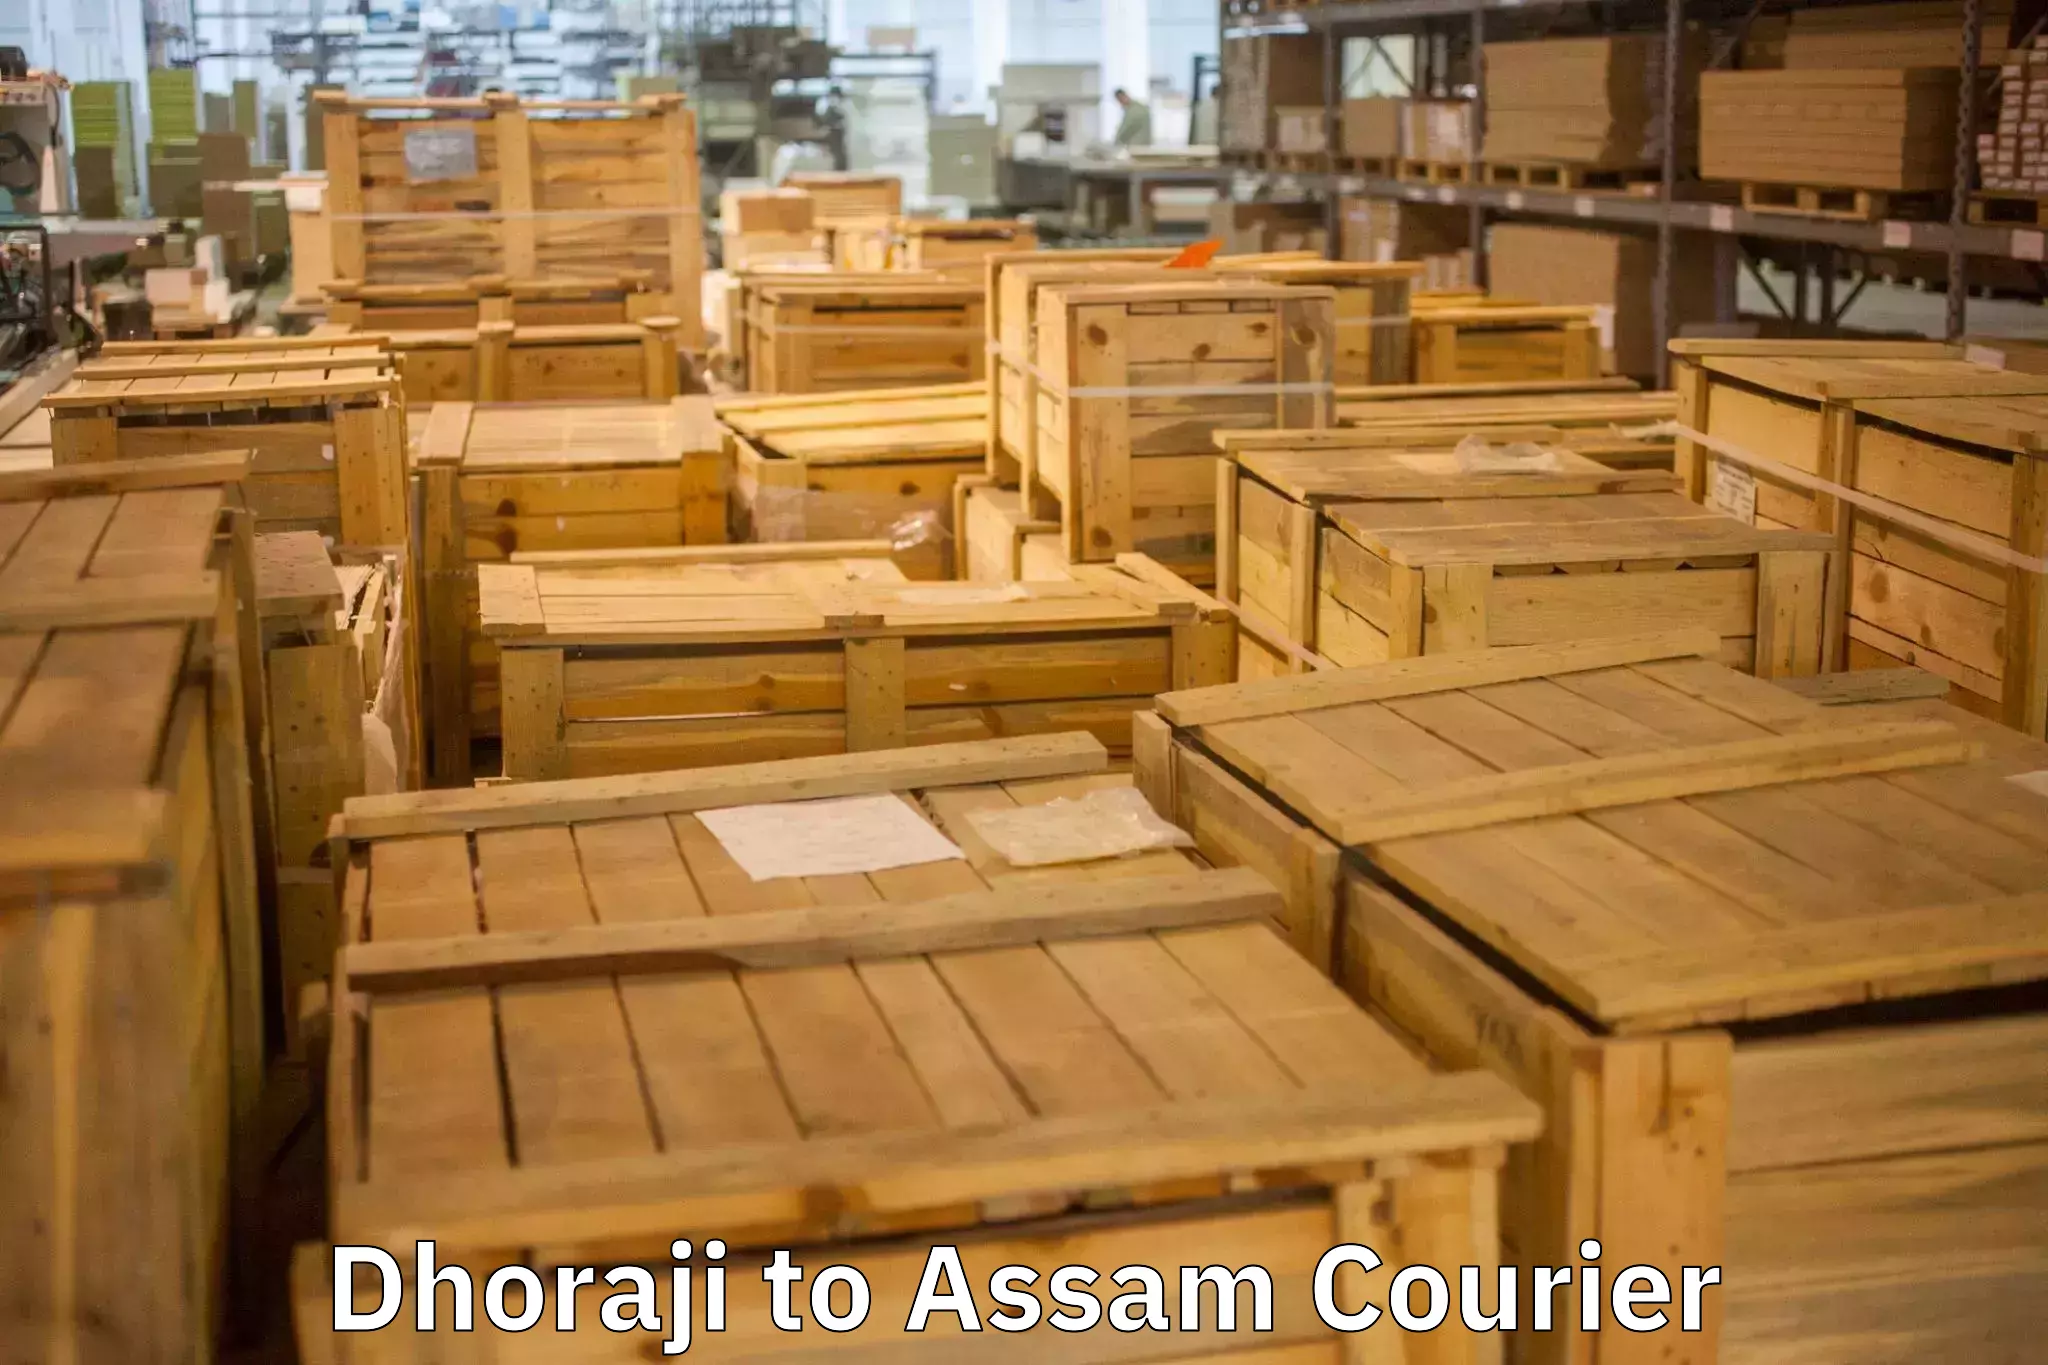 Moving and packing experts Dhoraji to Dhupdhara